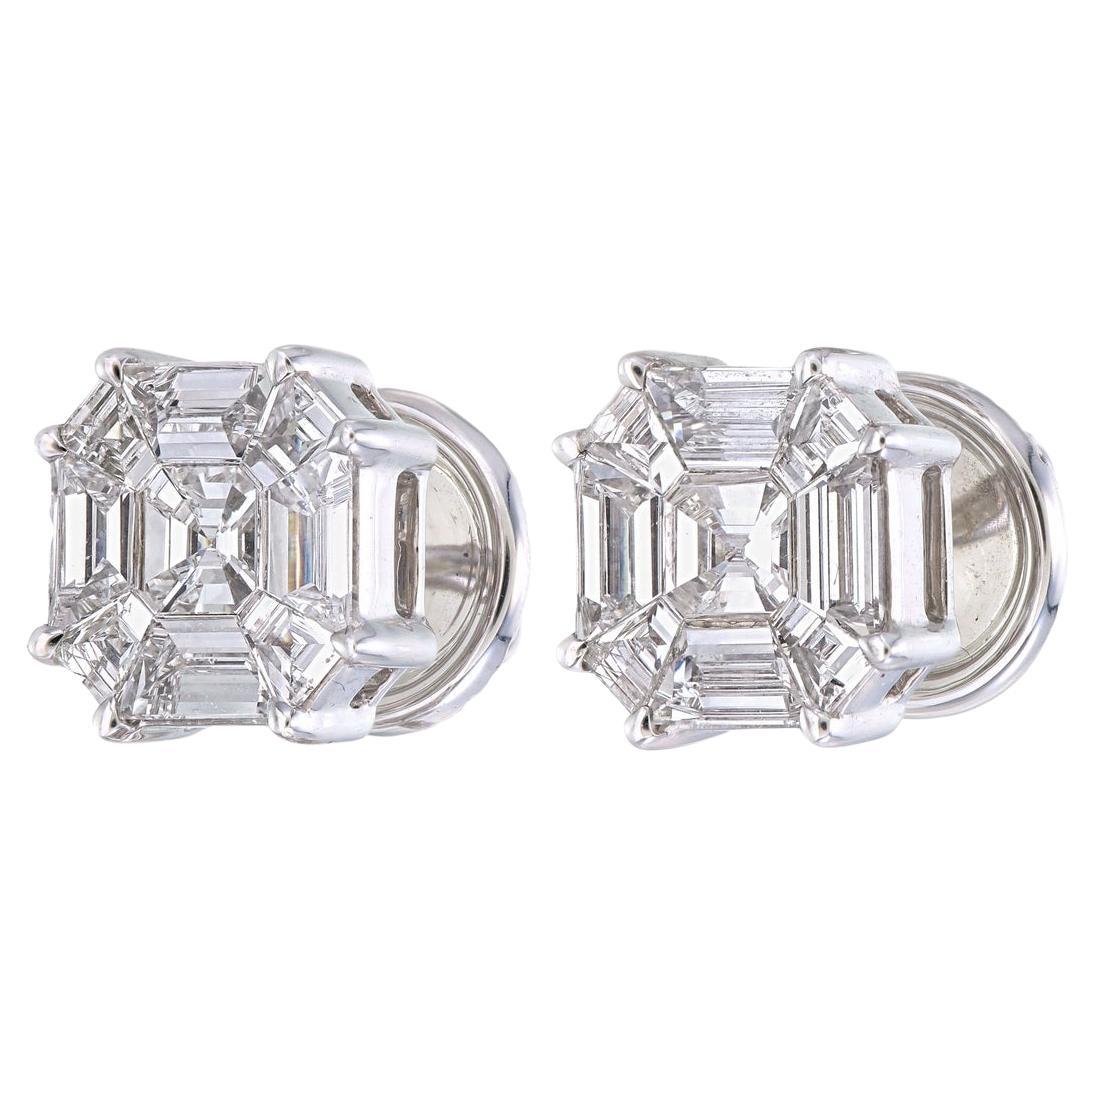 Invisible set Ascher shaped Piecut diamond earrings